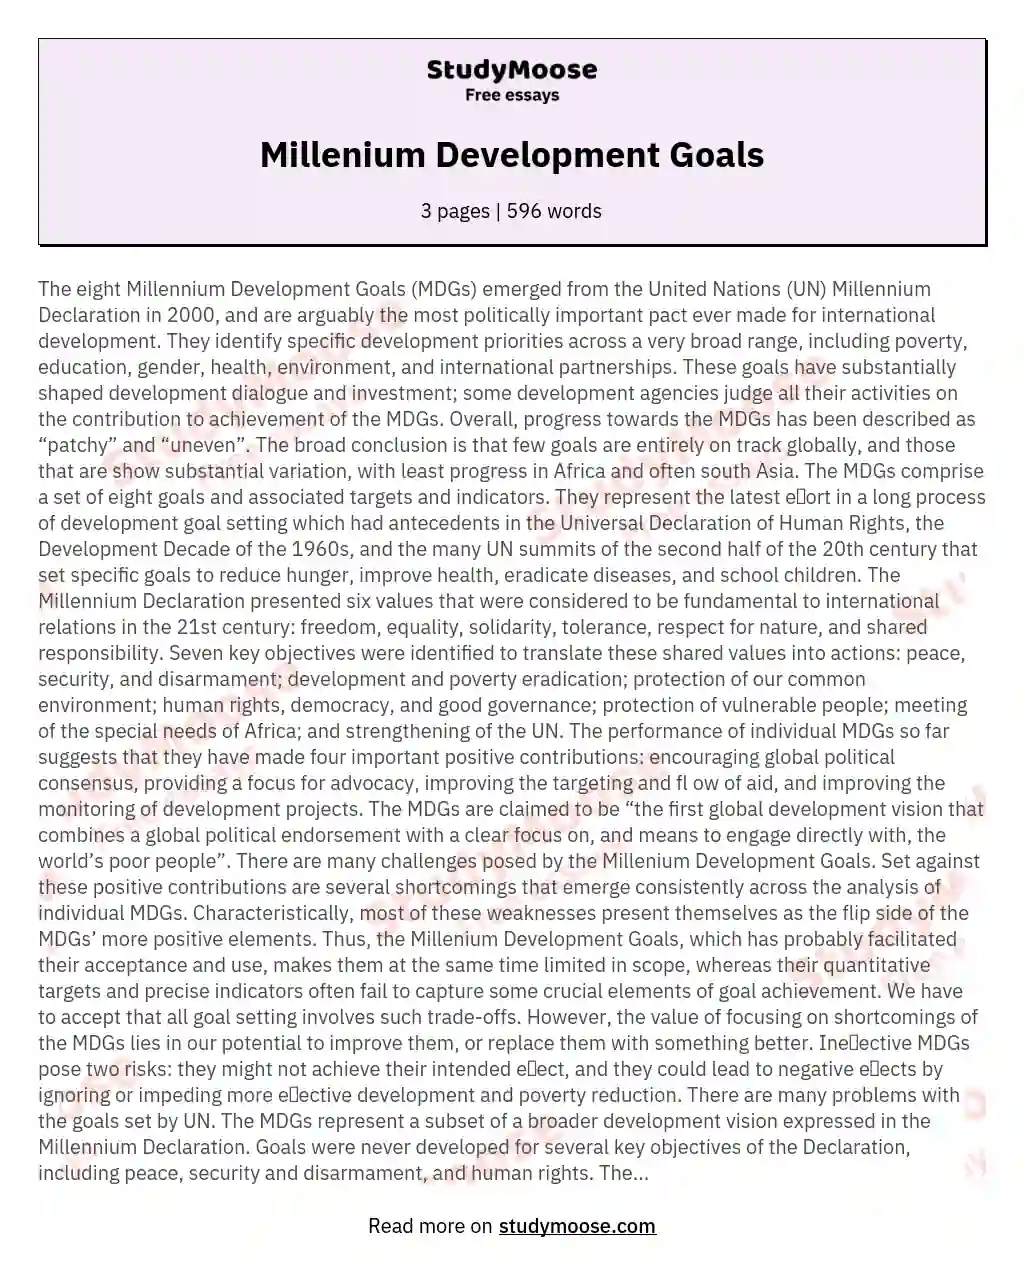 Millenium Development Goals essay